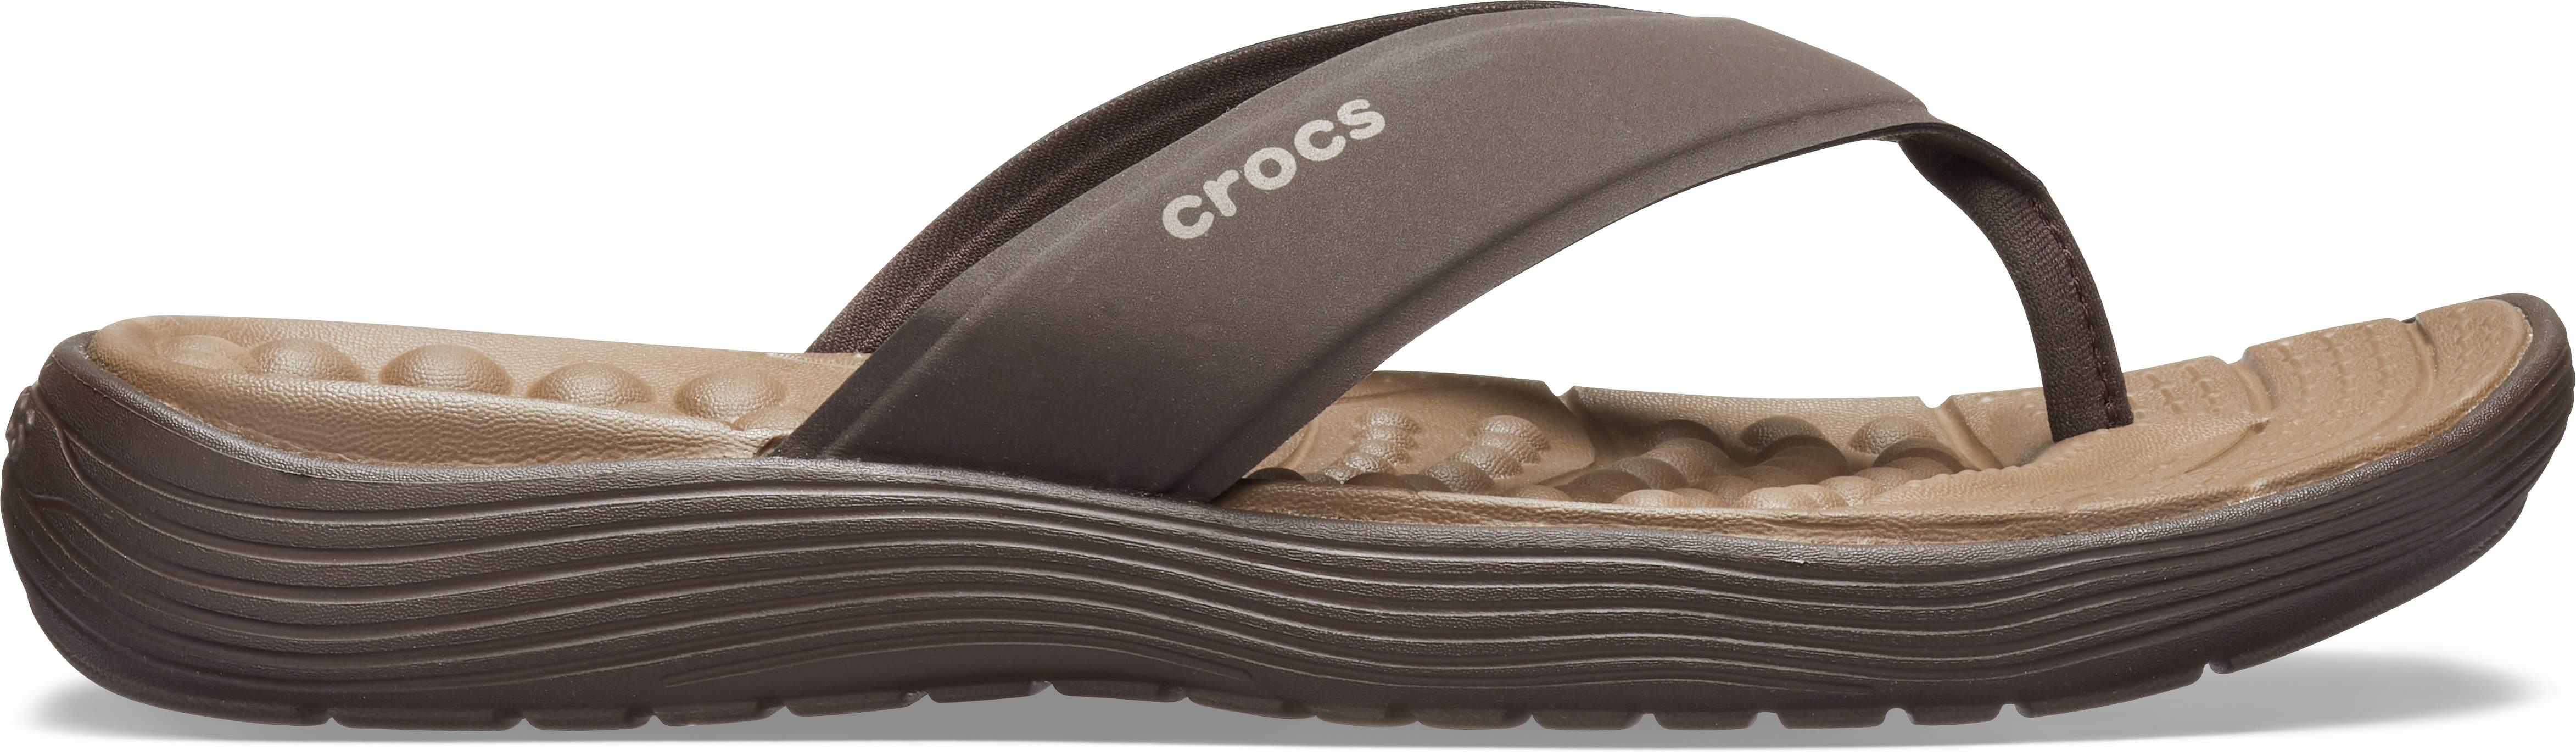 crocs reviva collection